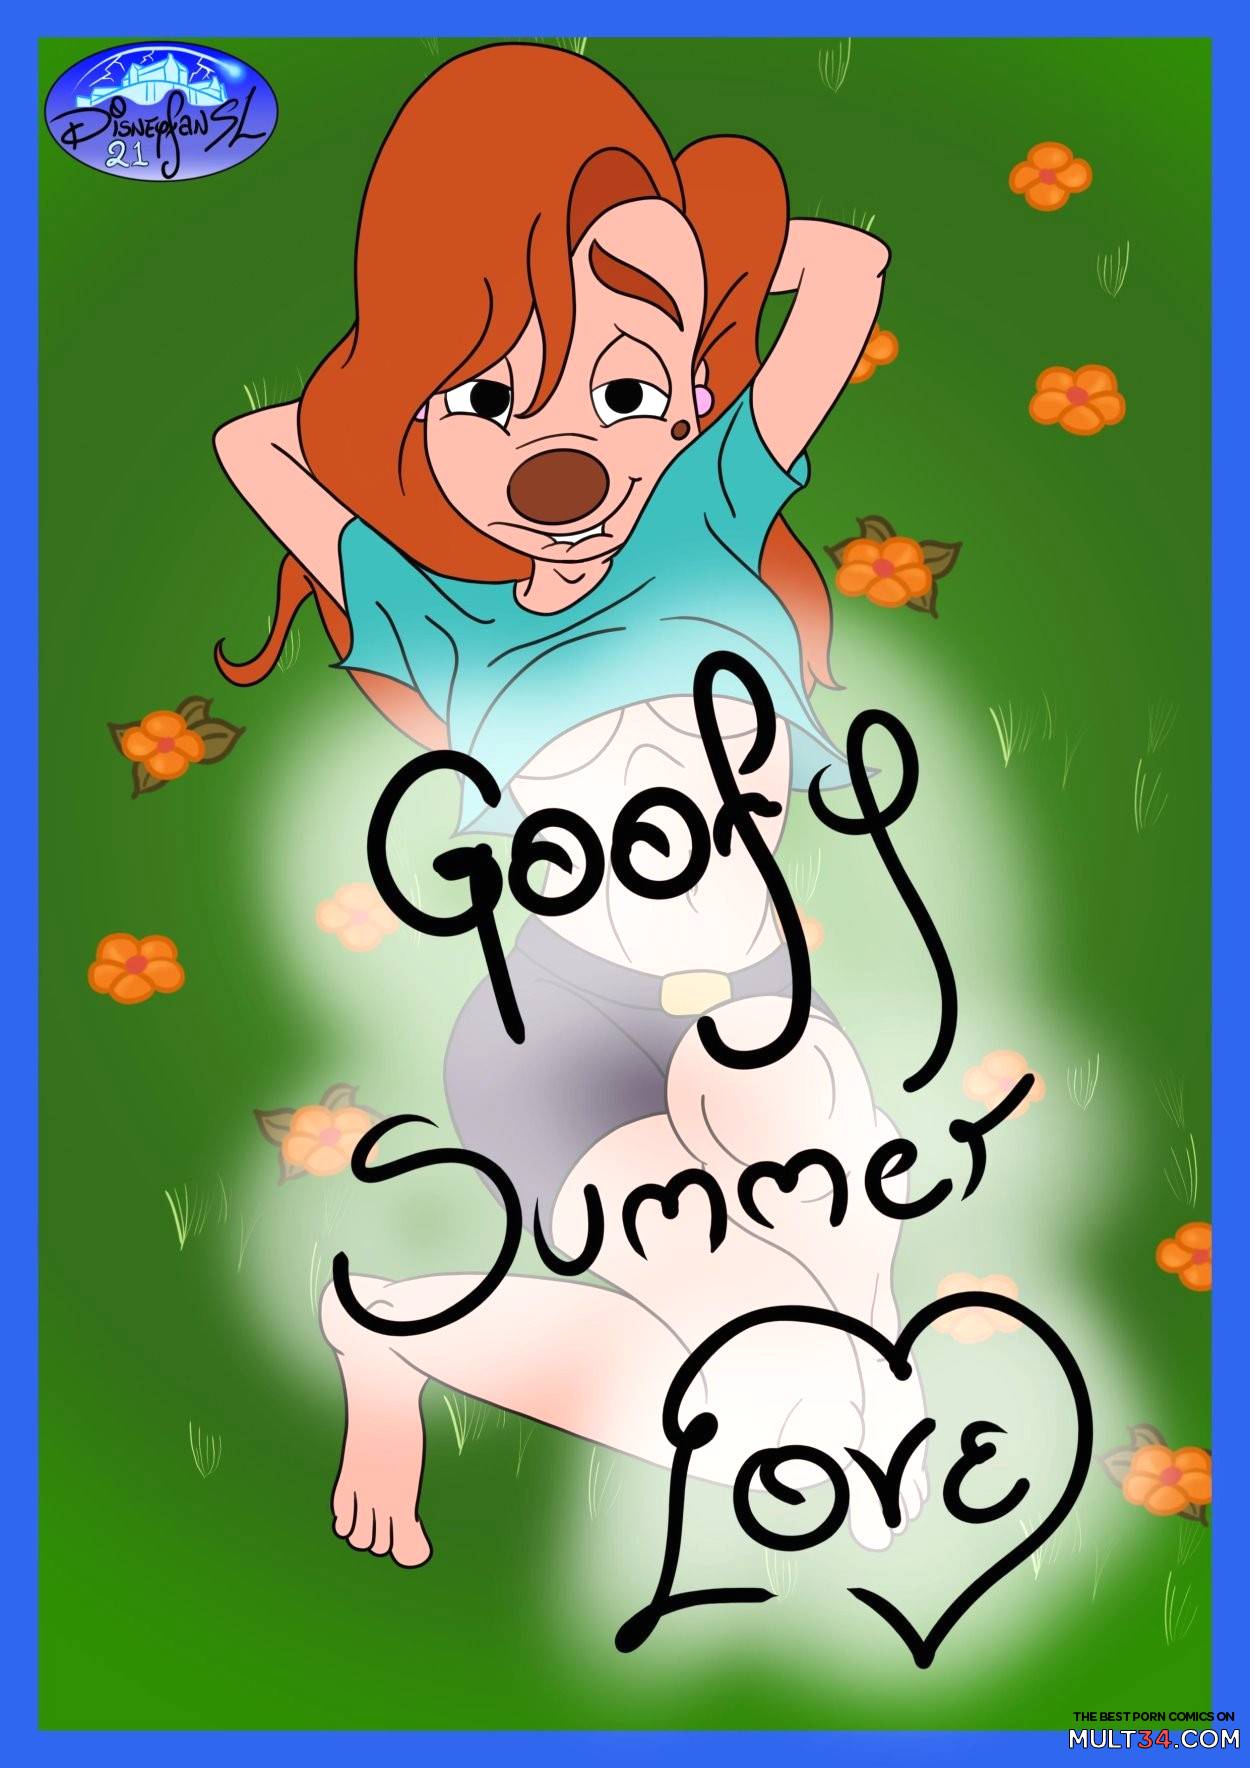 #GoofySummerLove Chapter 01 - A Goofy Movie page 1